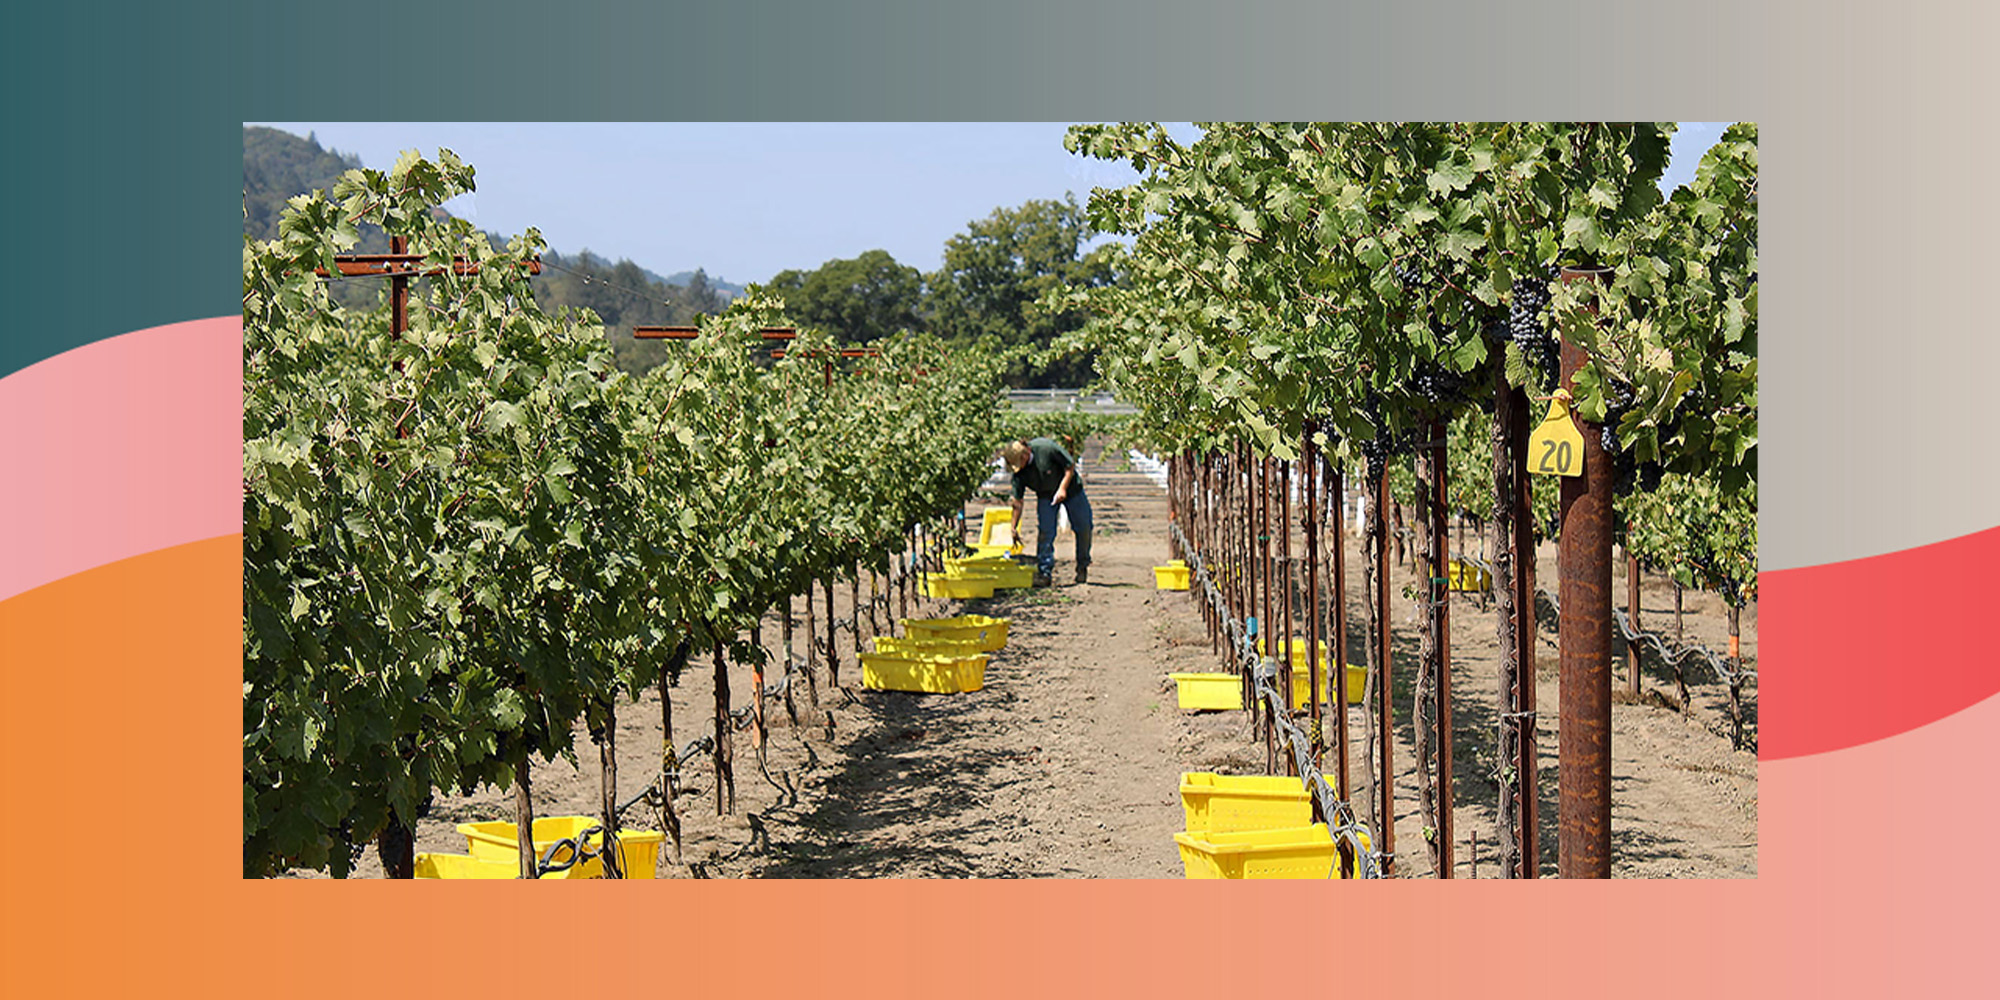 One row at a vineyard